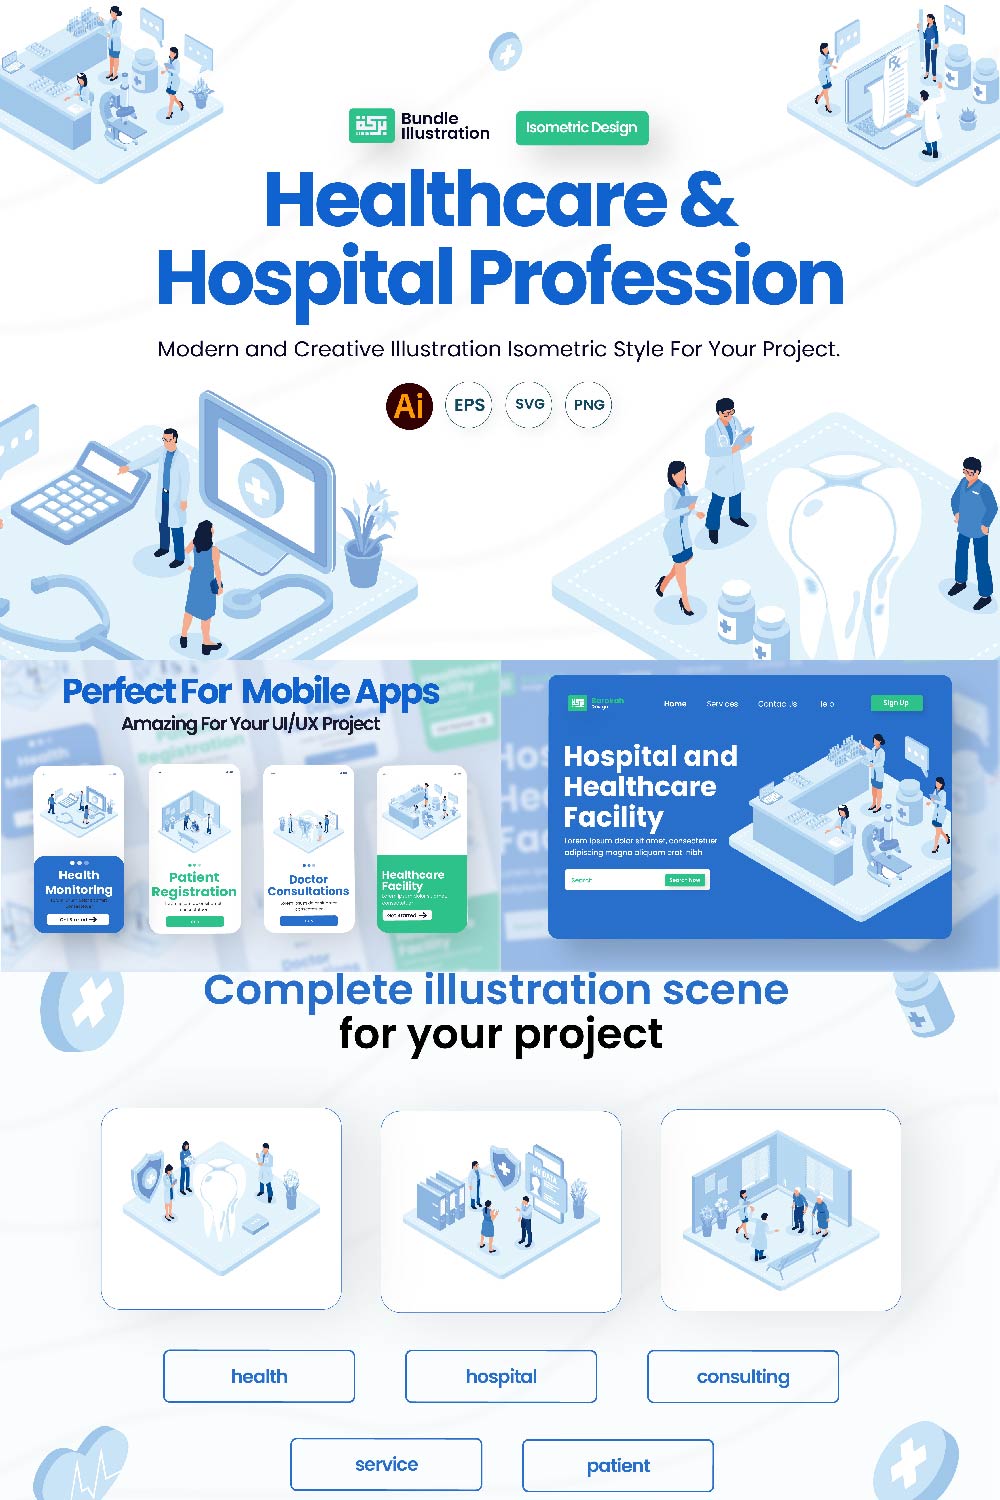 Healthcare & Hospital Profession Illustration Design pinterest preview image.